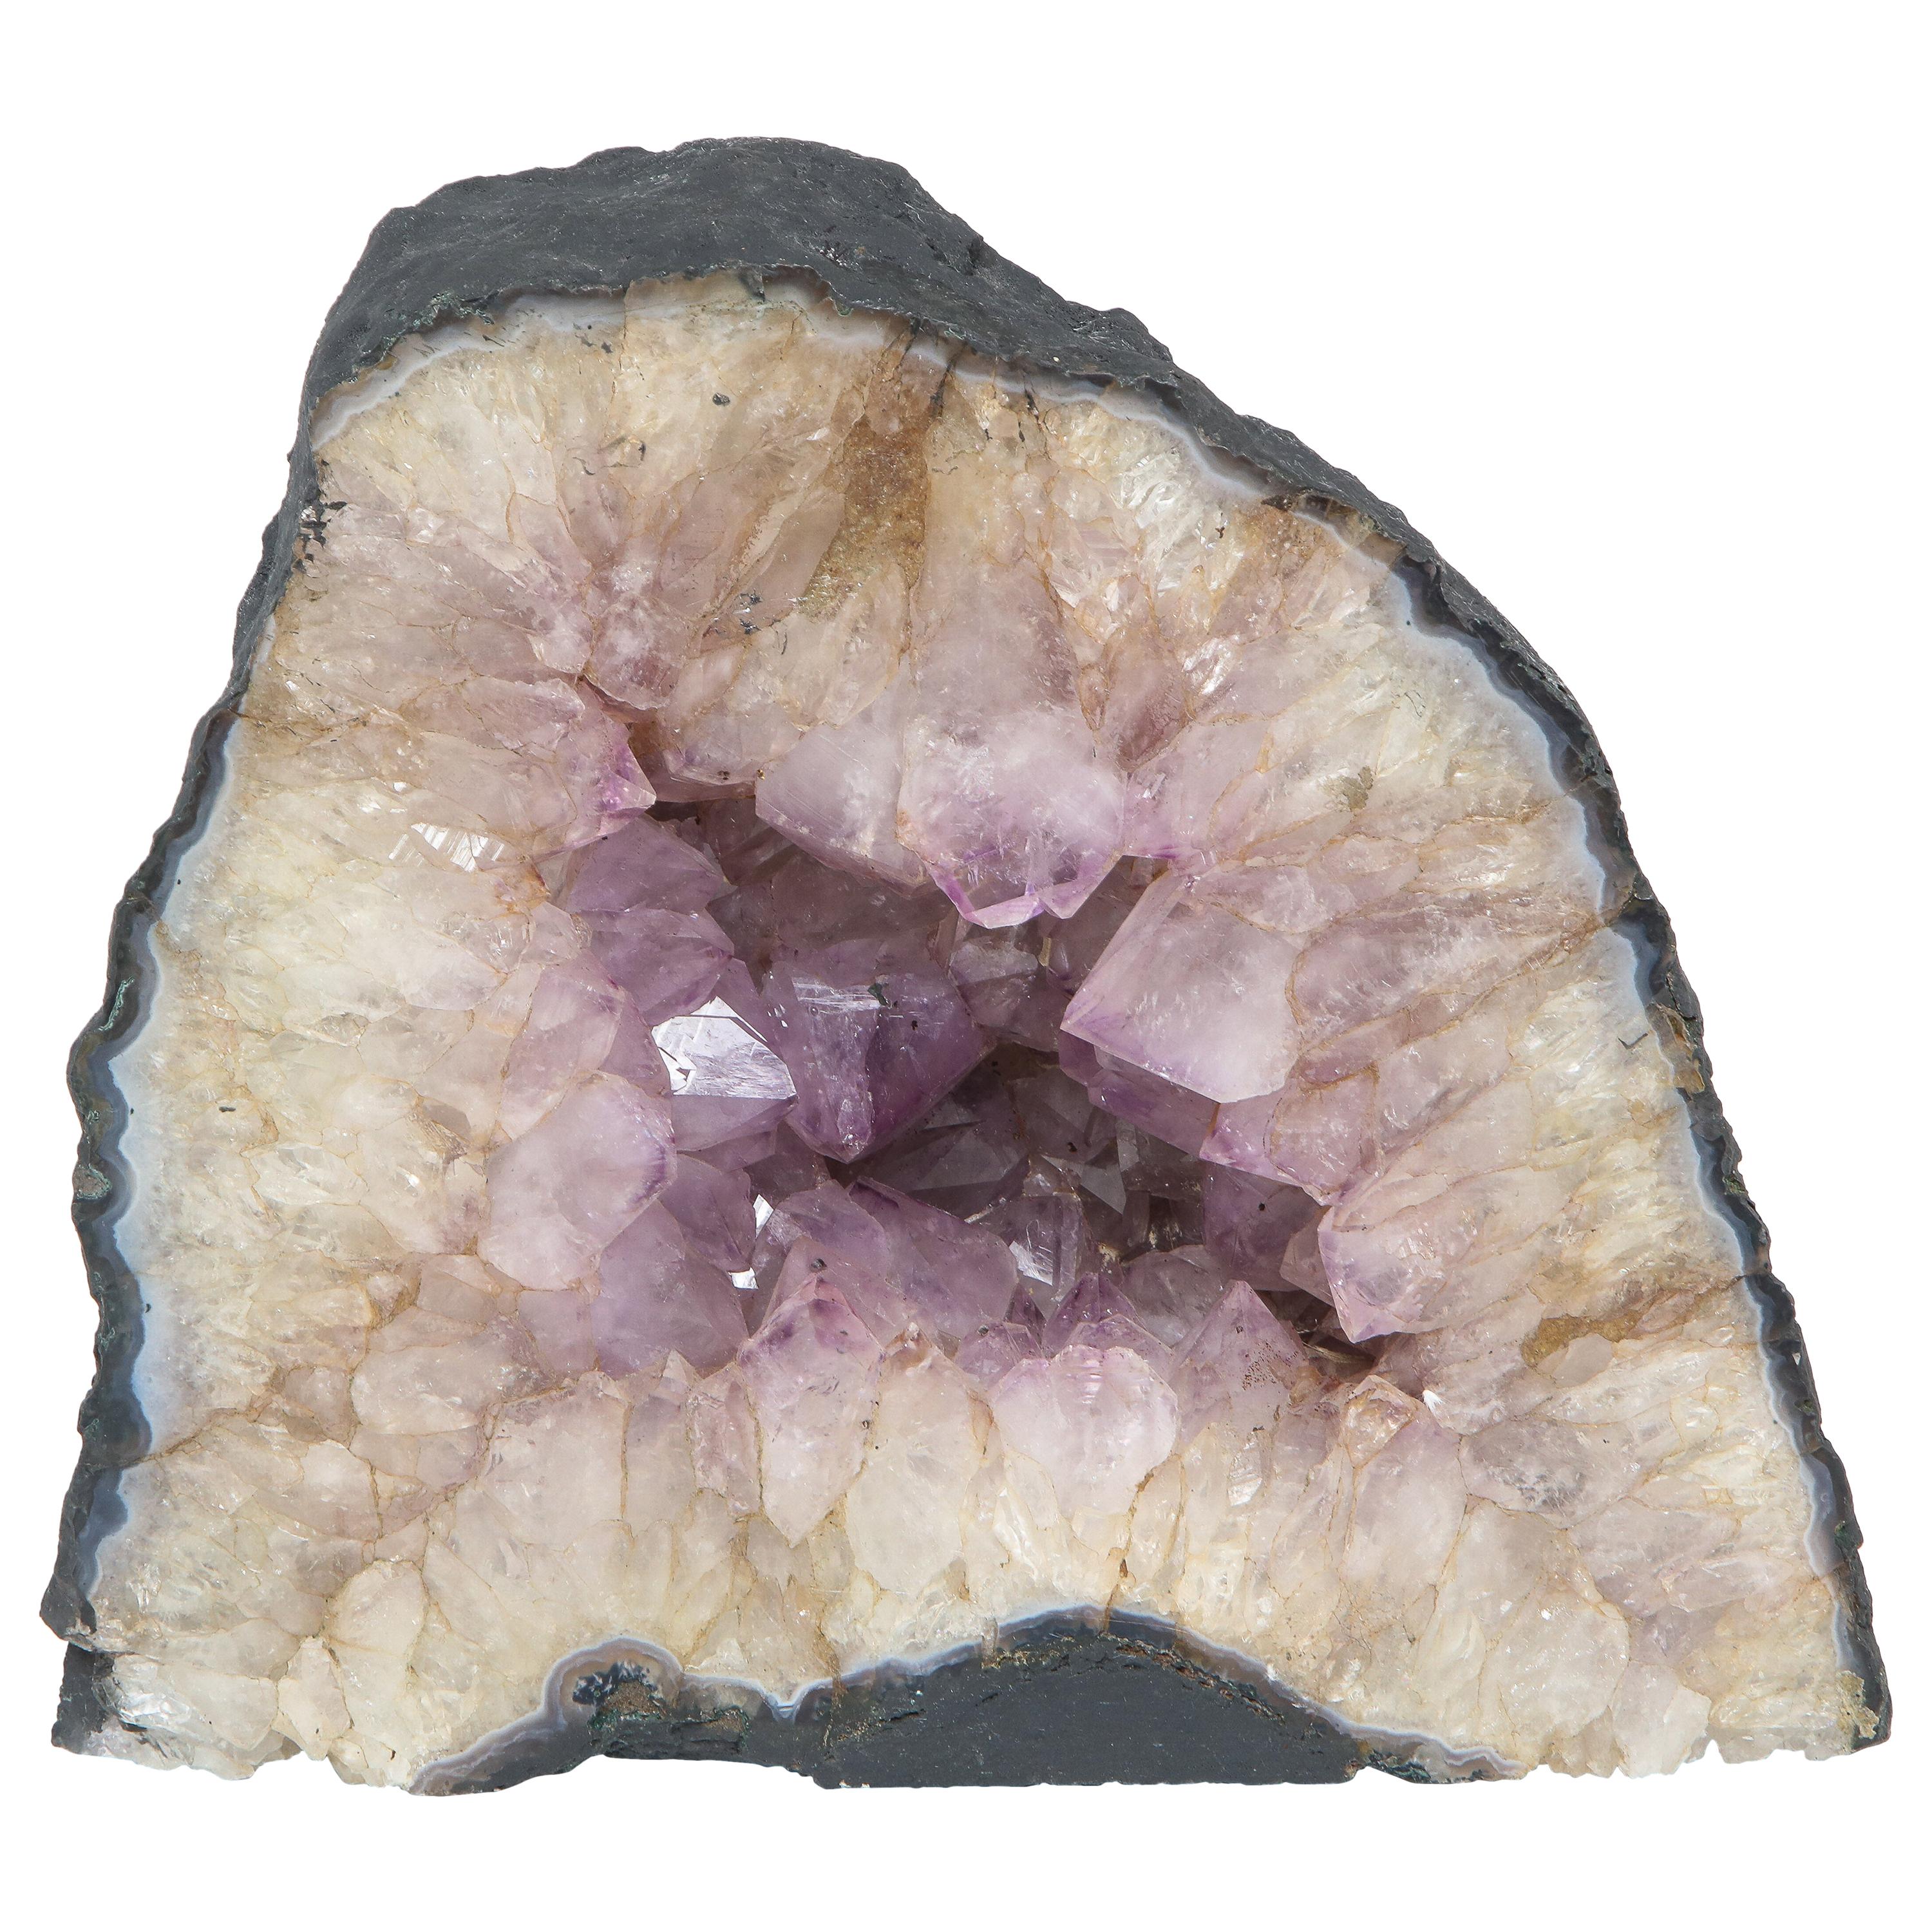 Massive Amethyst, Quartz Crystal Specimen